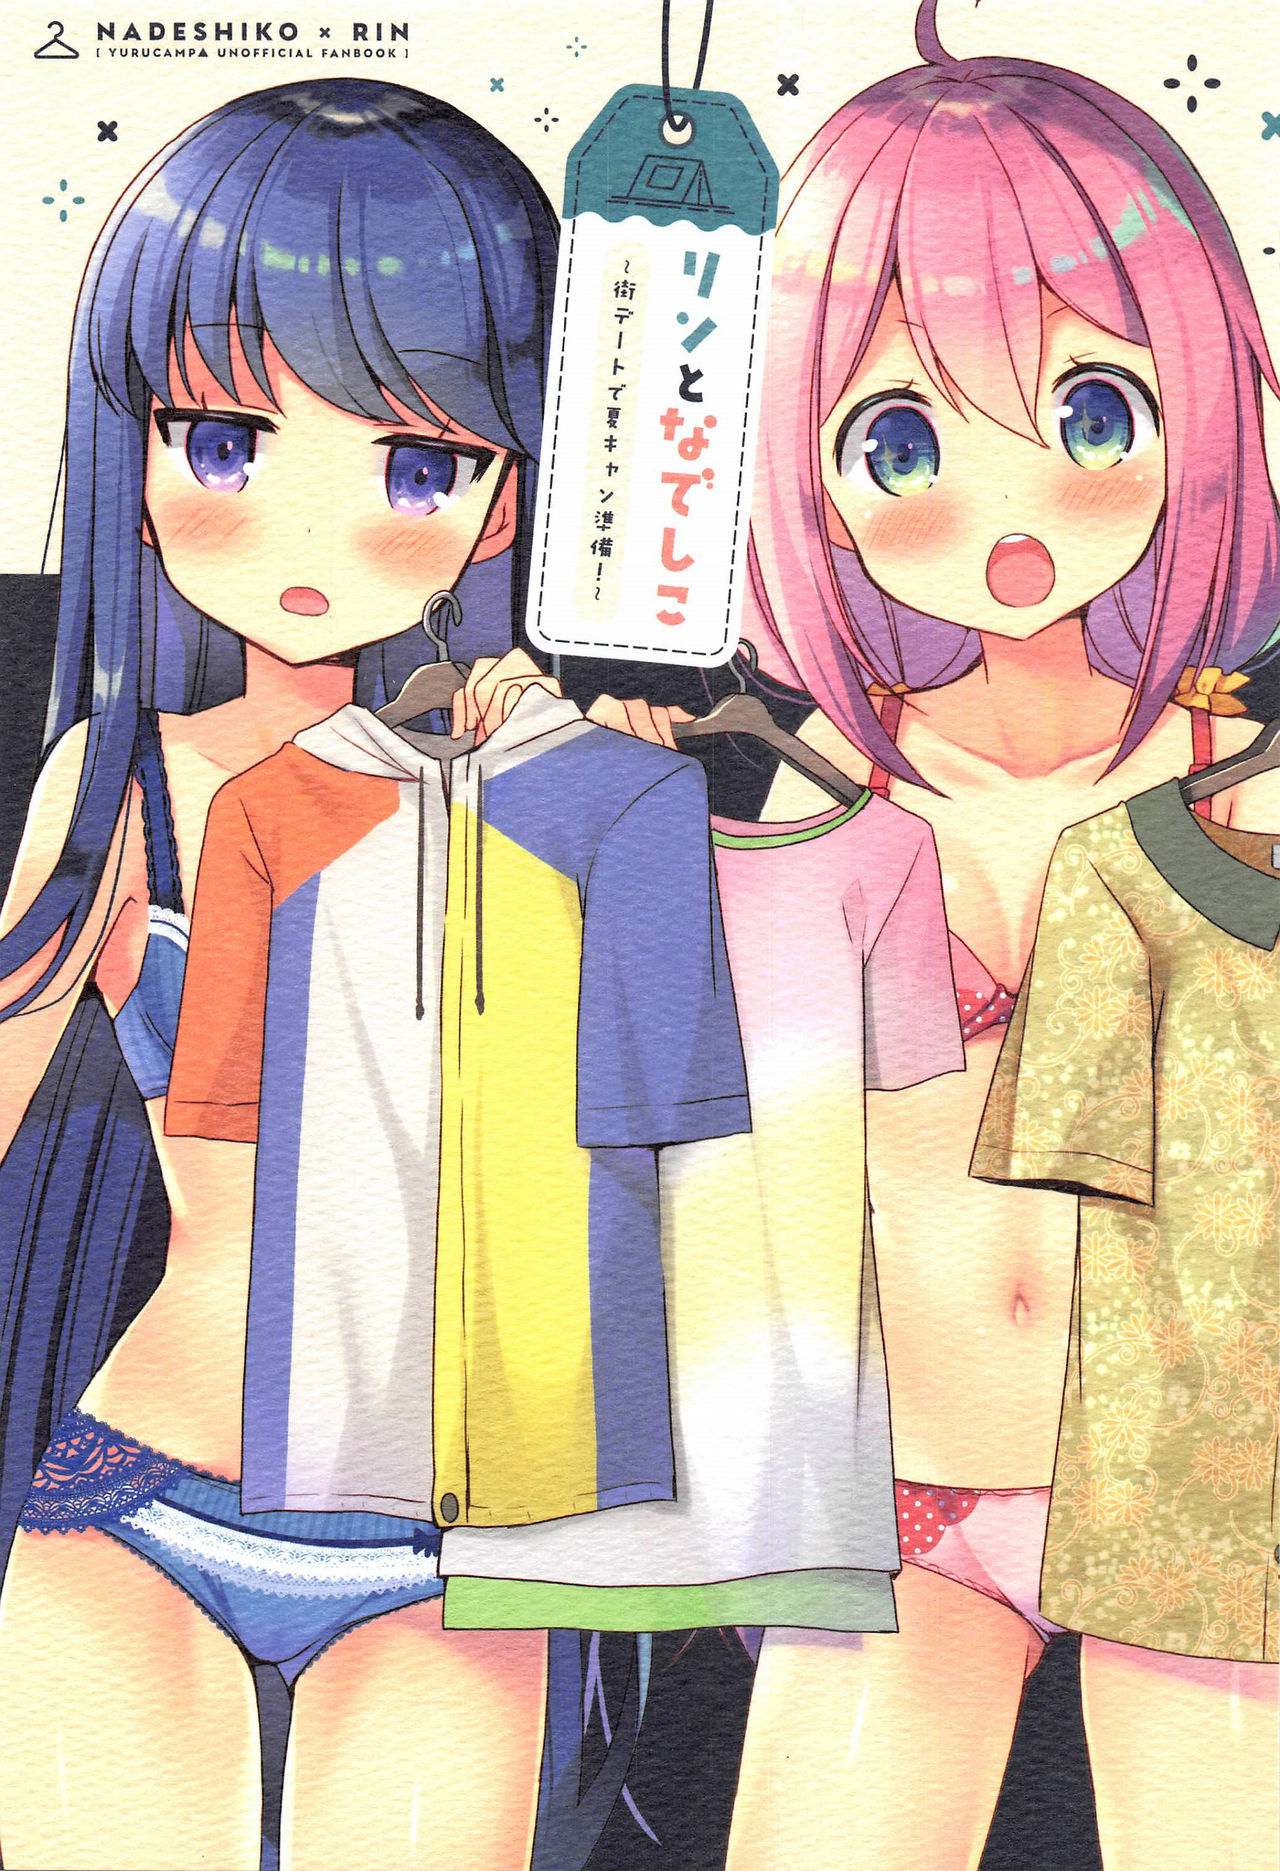 Yuru Camp - Rin and Nadeshiko ~Preparing For Summer Camp On a City Date!~ cover